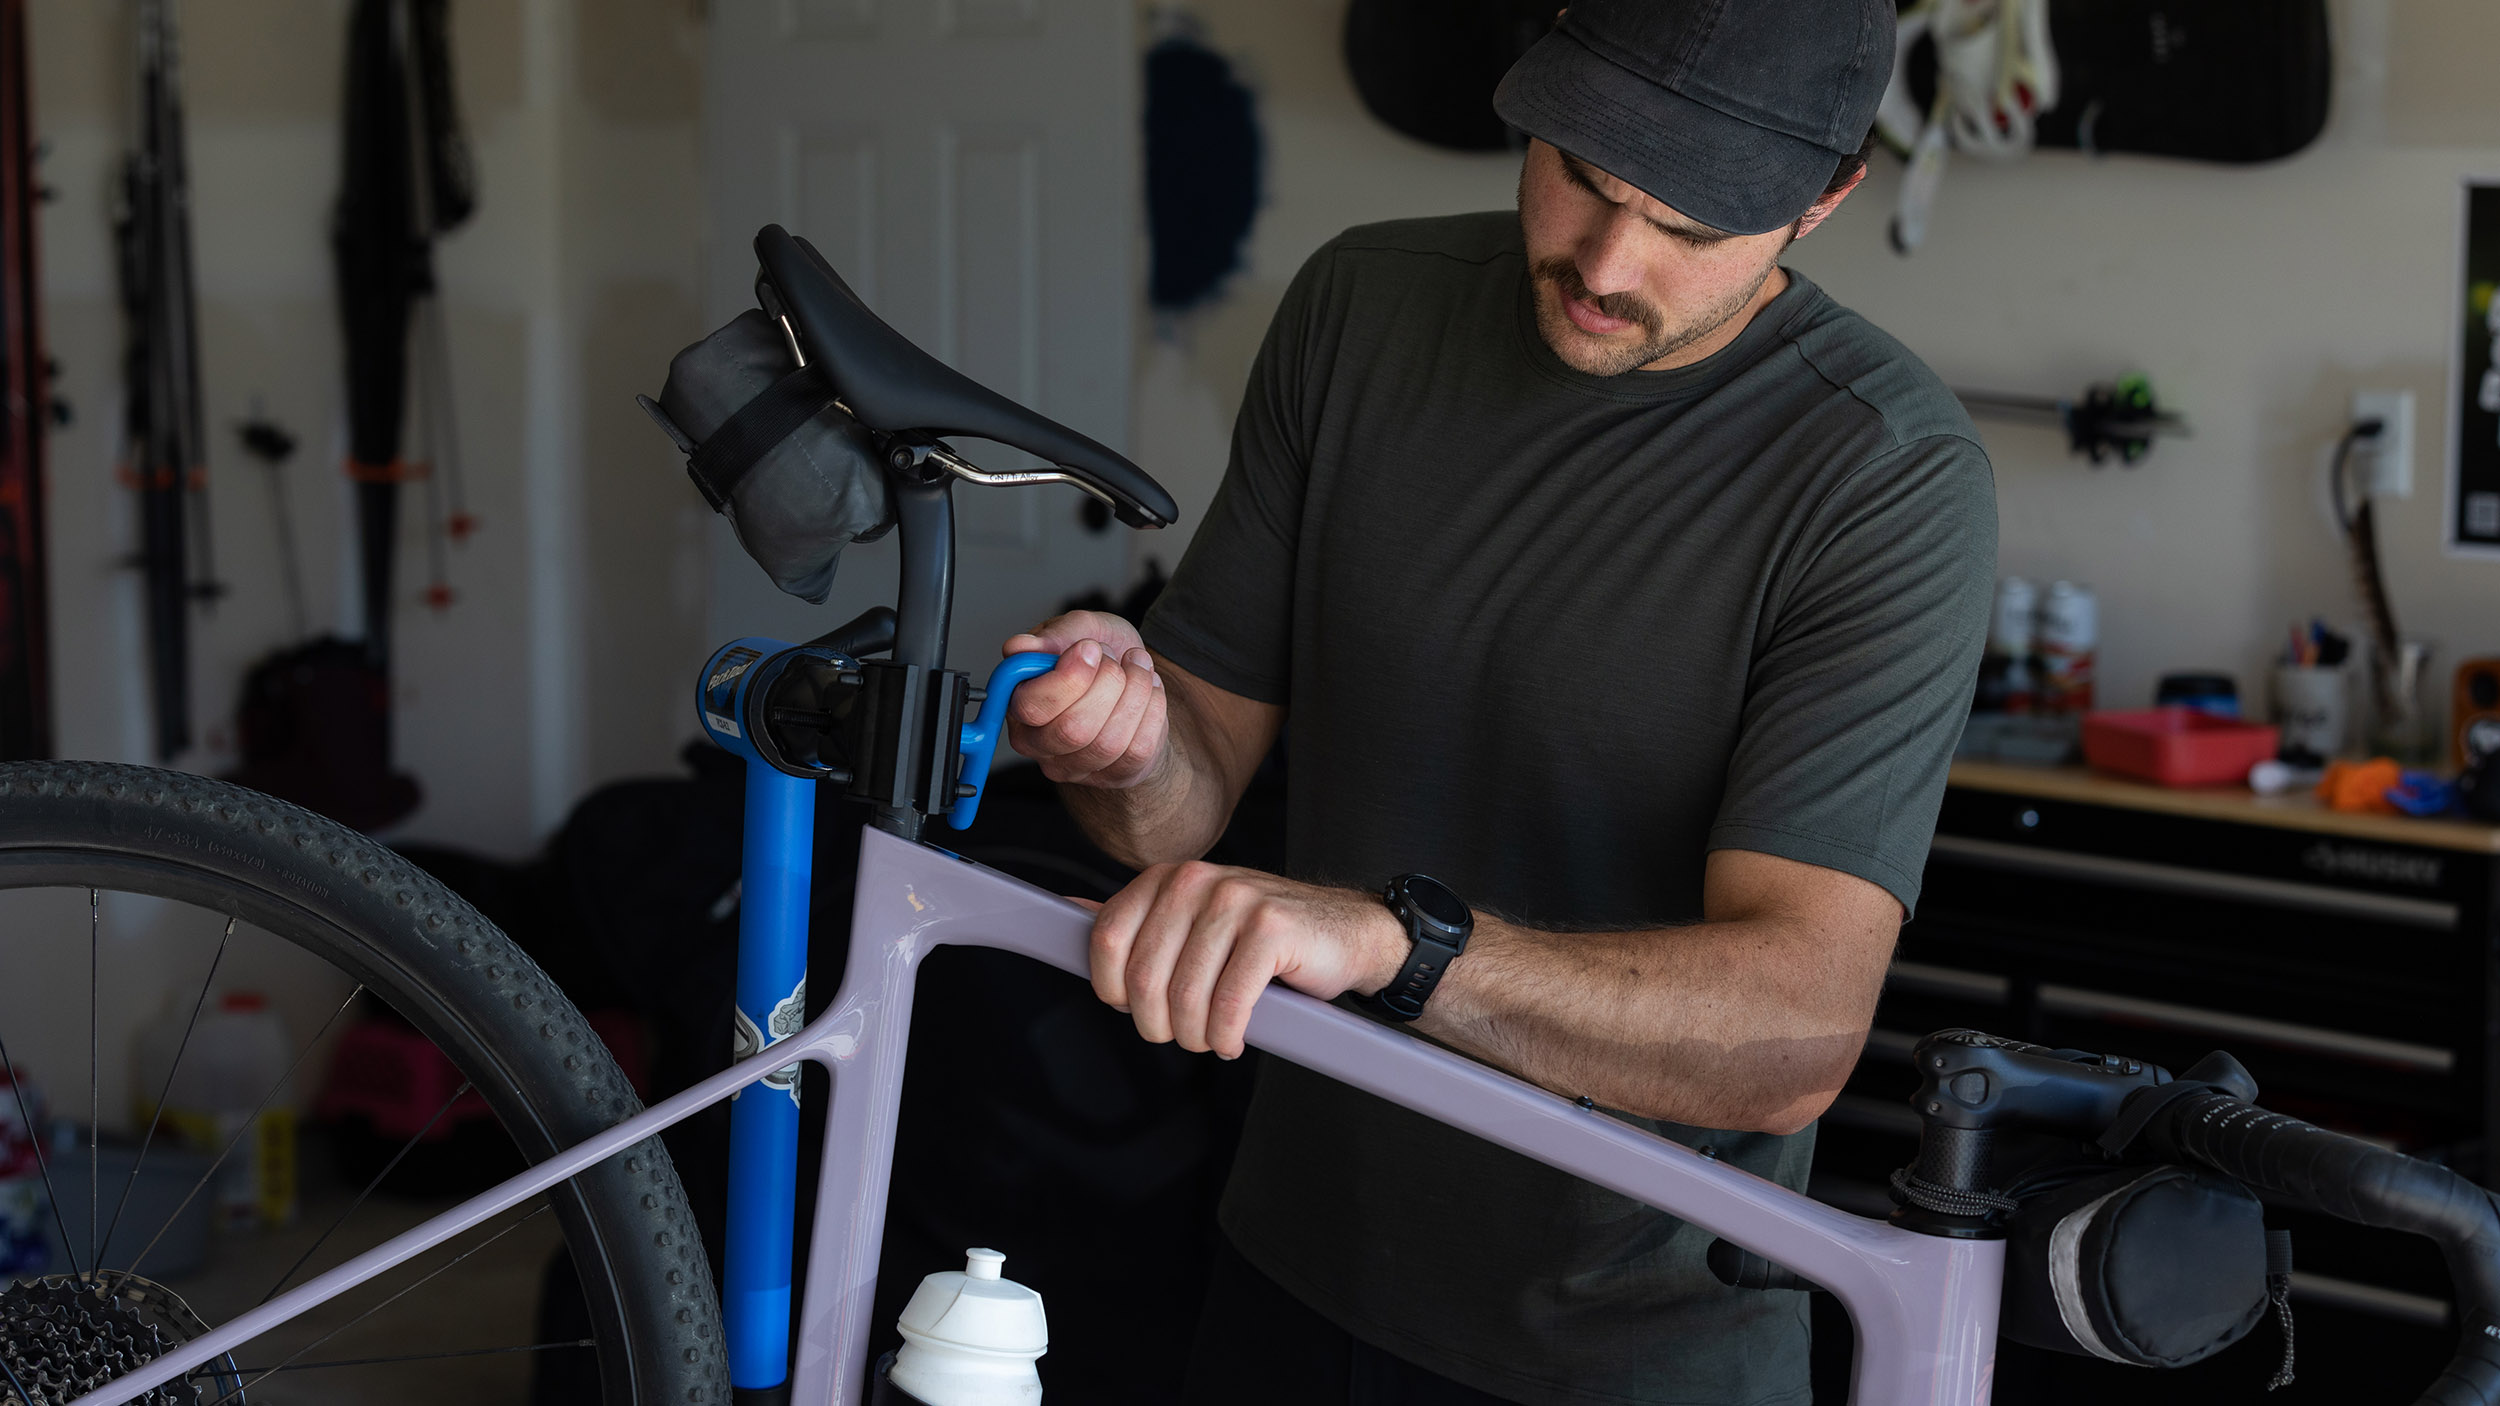 a man fixes a bike while wearing the ENVE merino tee